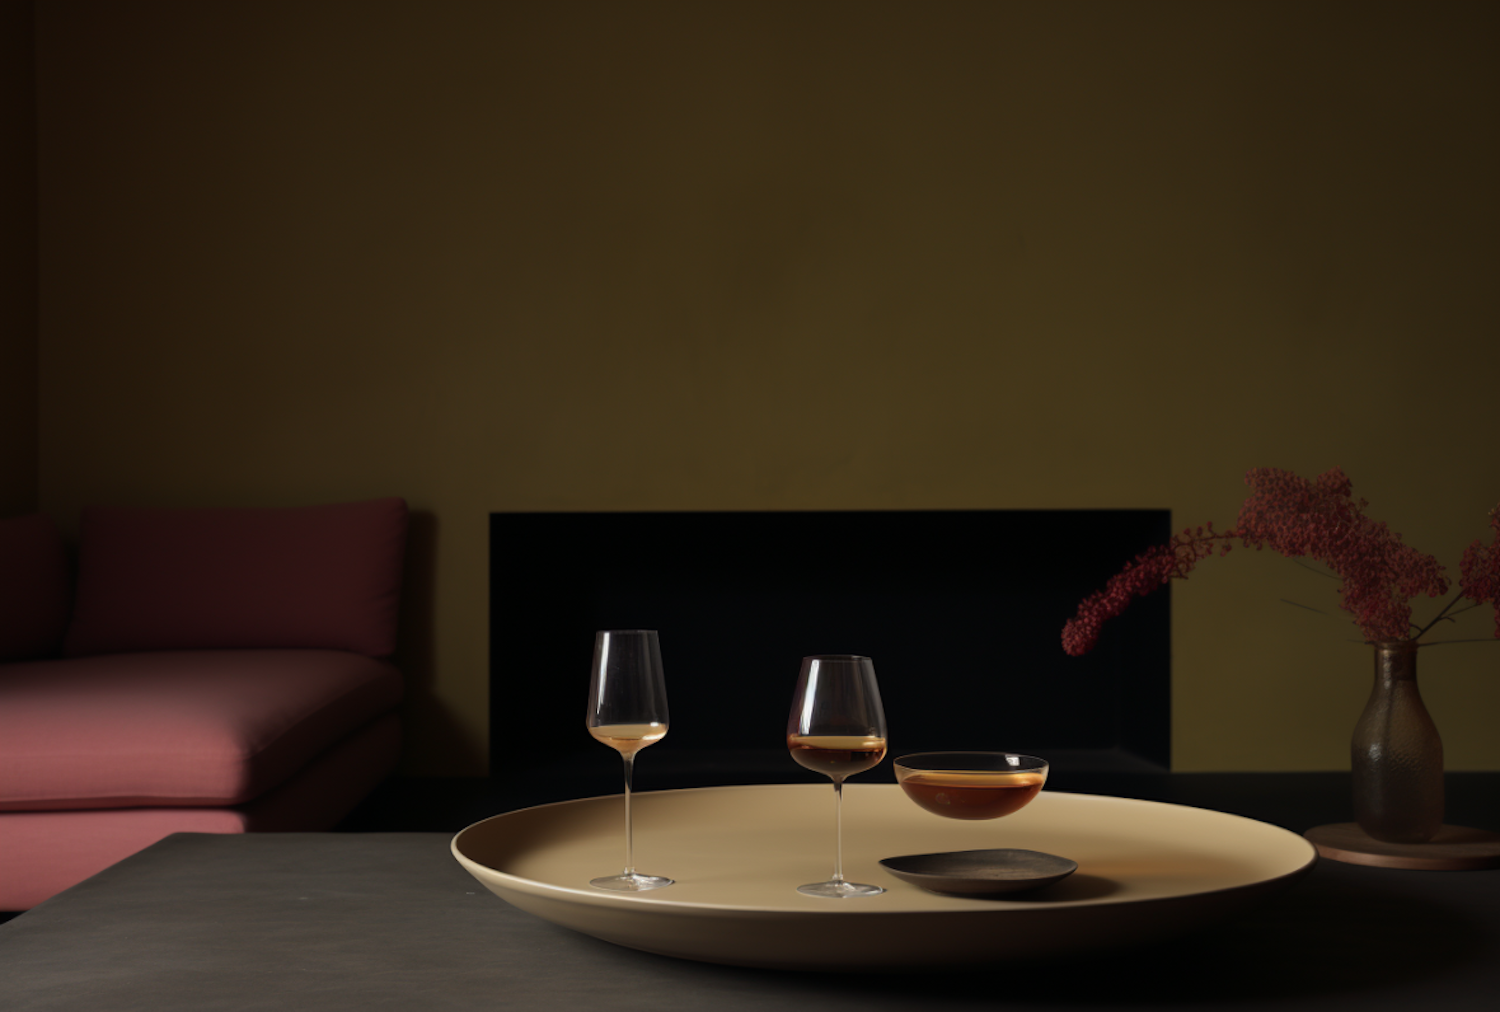 Tranquil Elegance: Modern Wine Glass Still Life